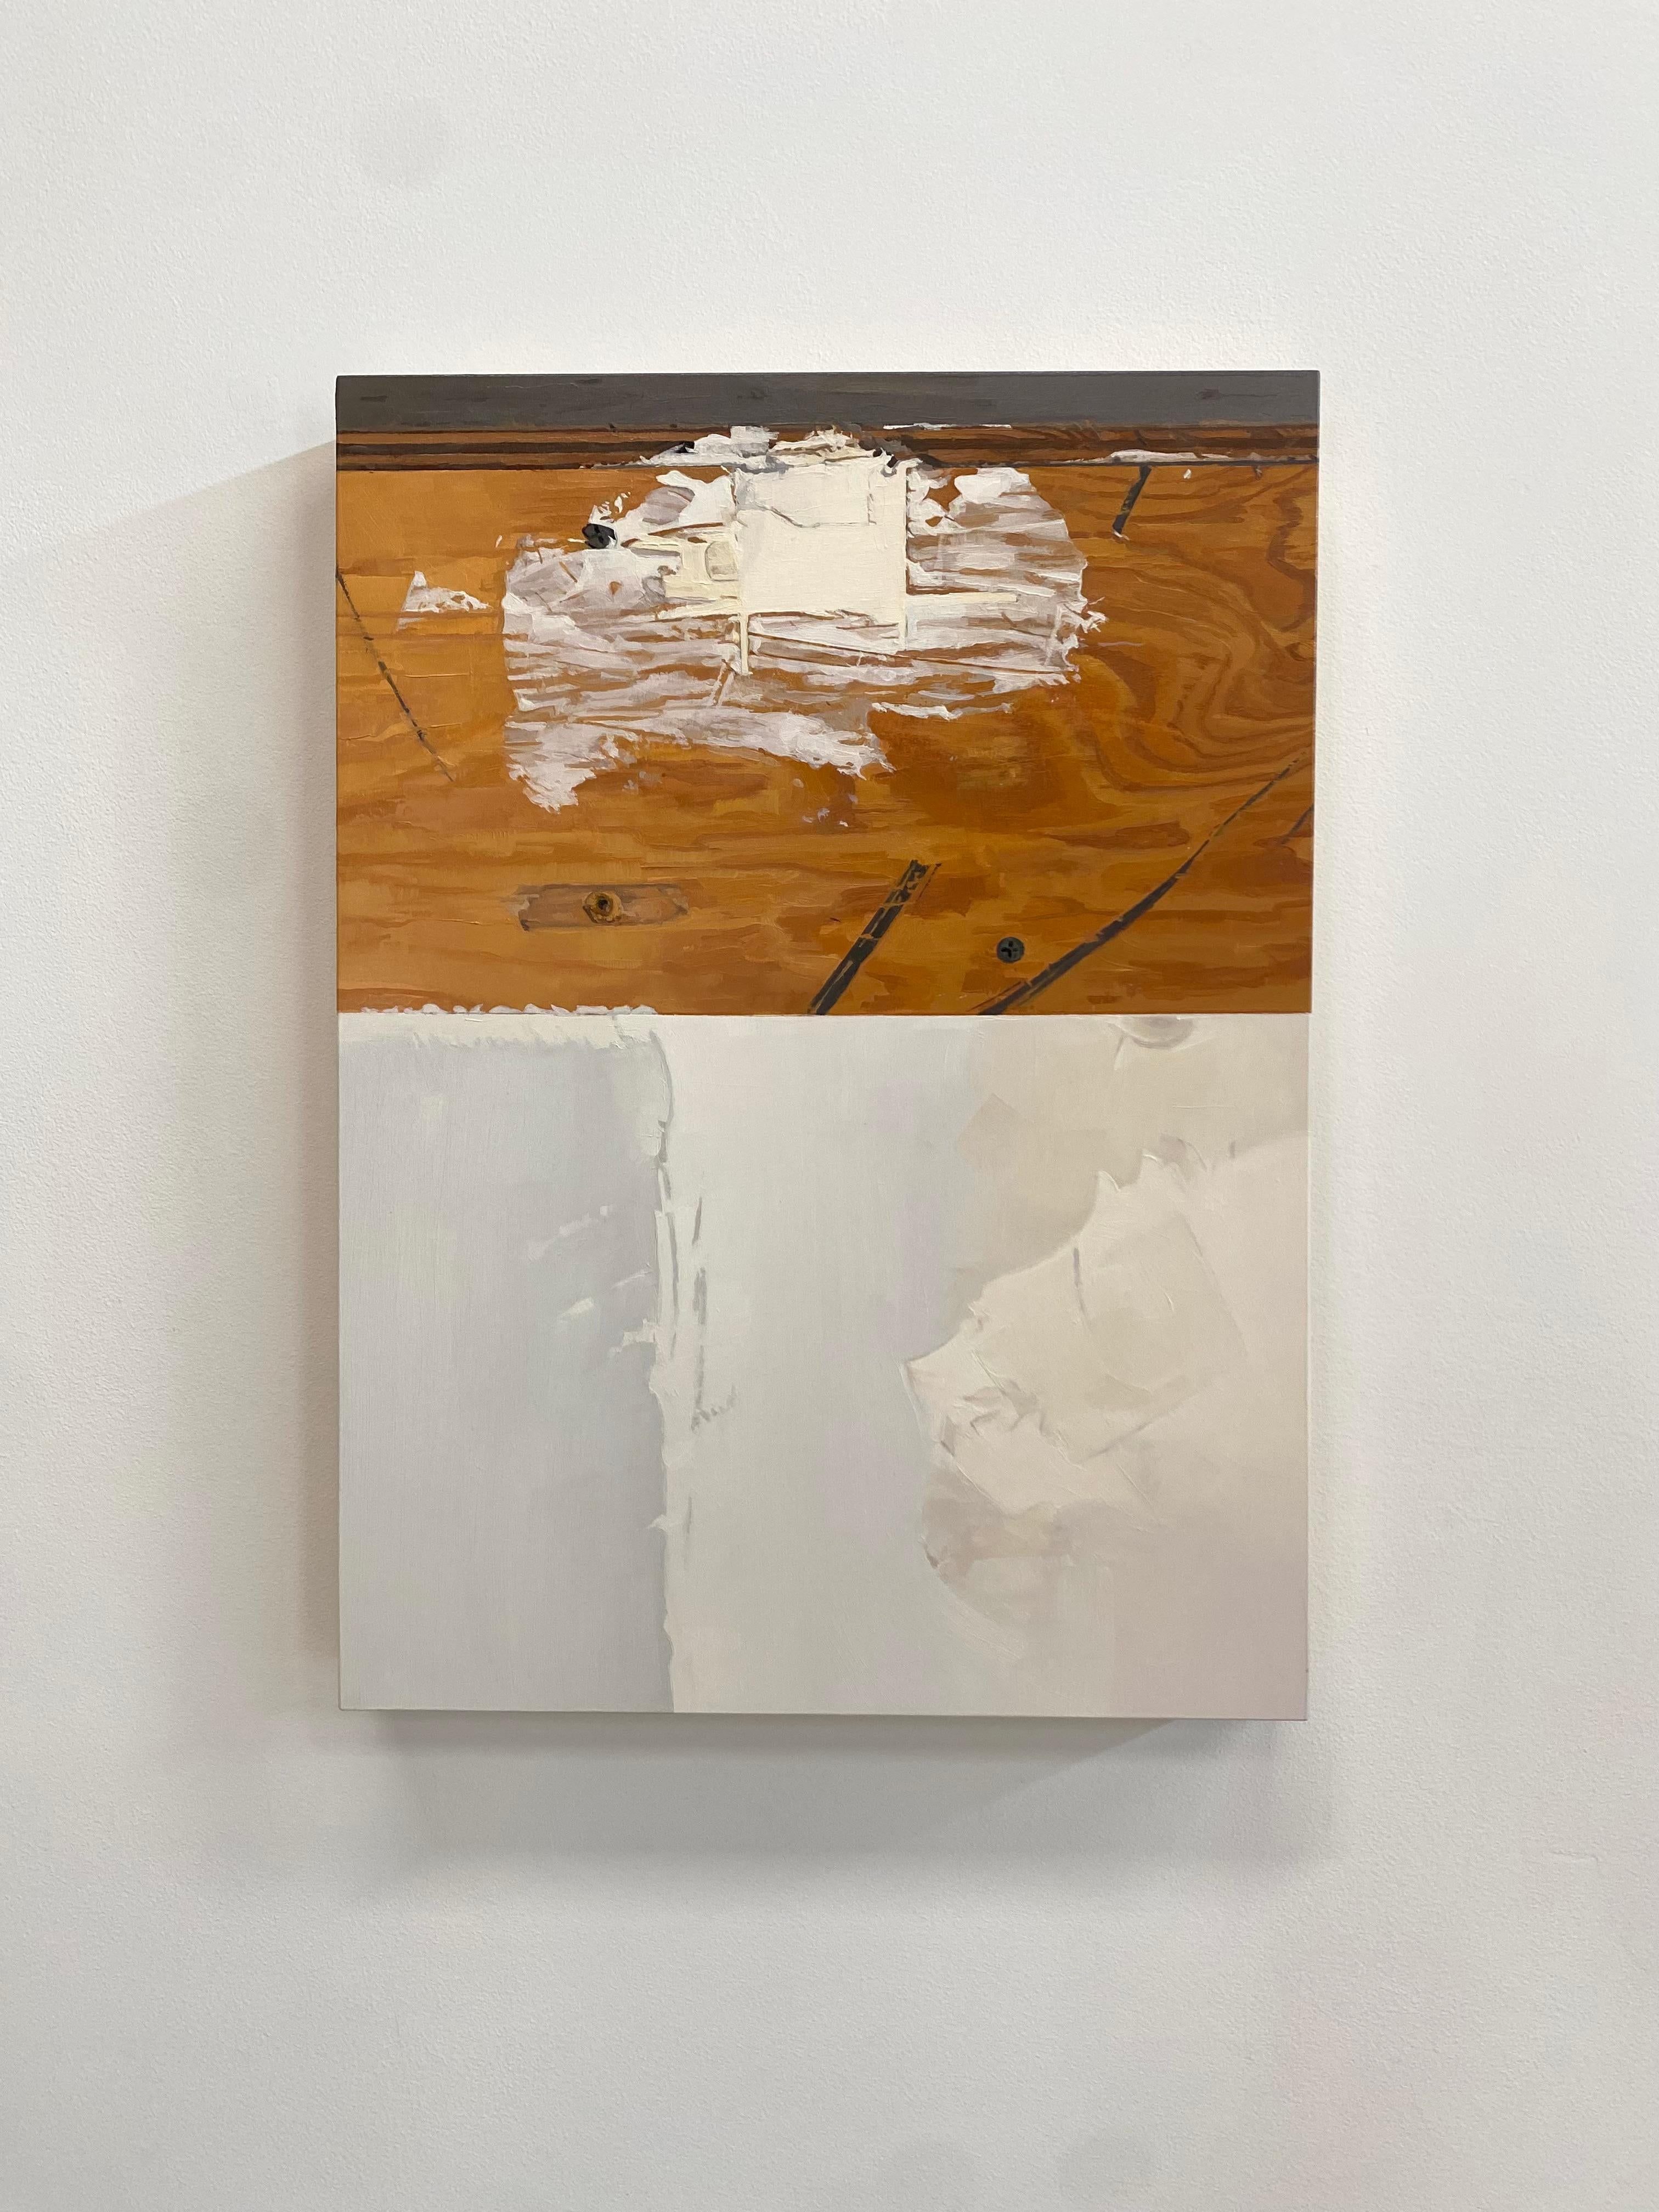 Patch, White Paint on Wooden Board, Woodgrain, Golden Brown - Painting by Brett Eberhardt